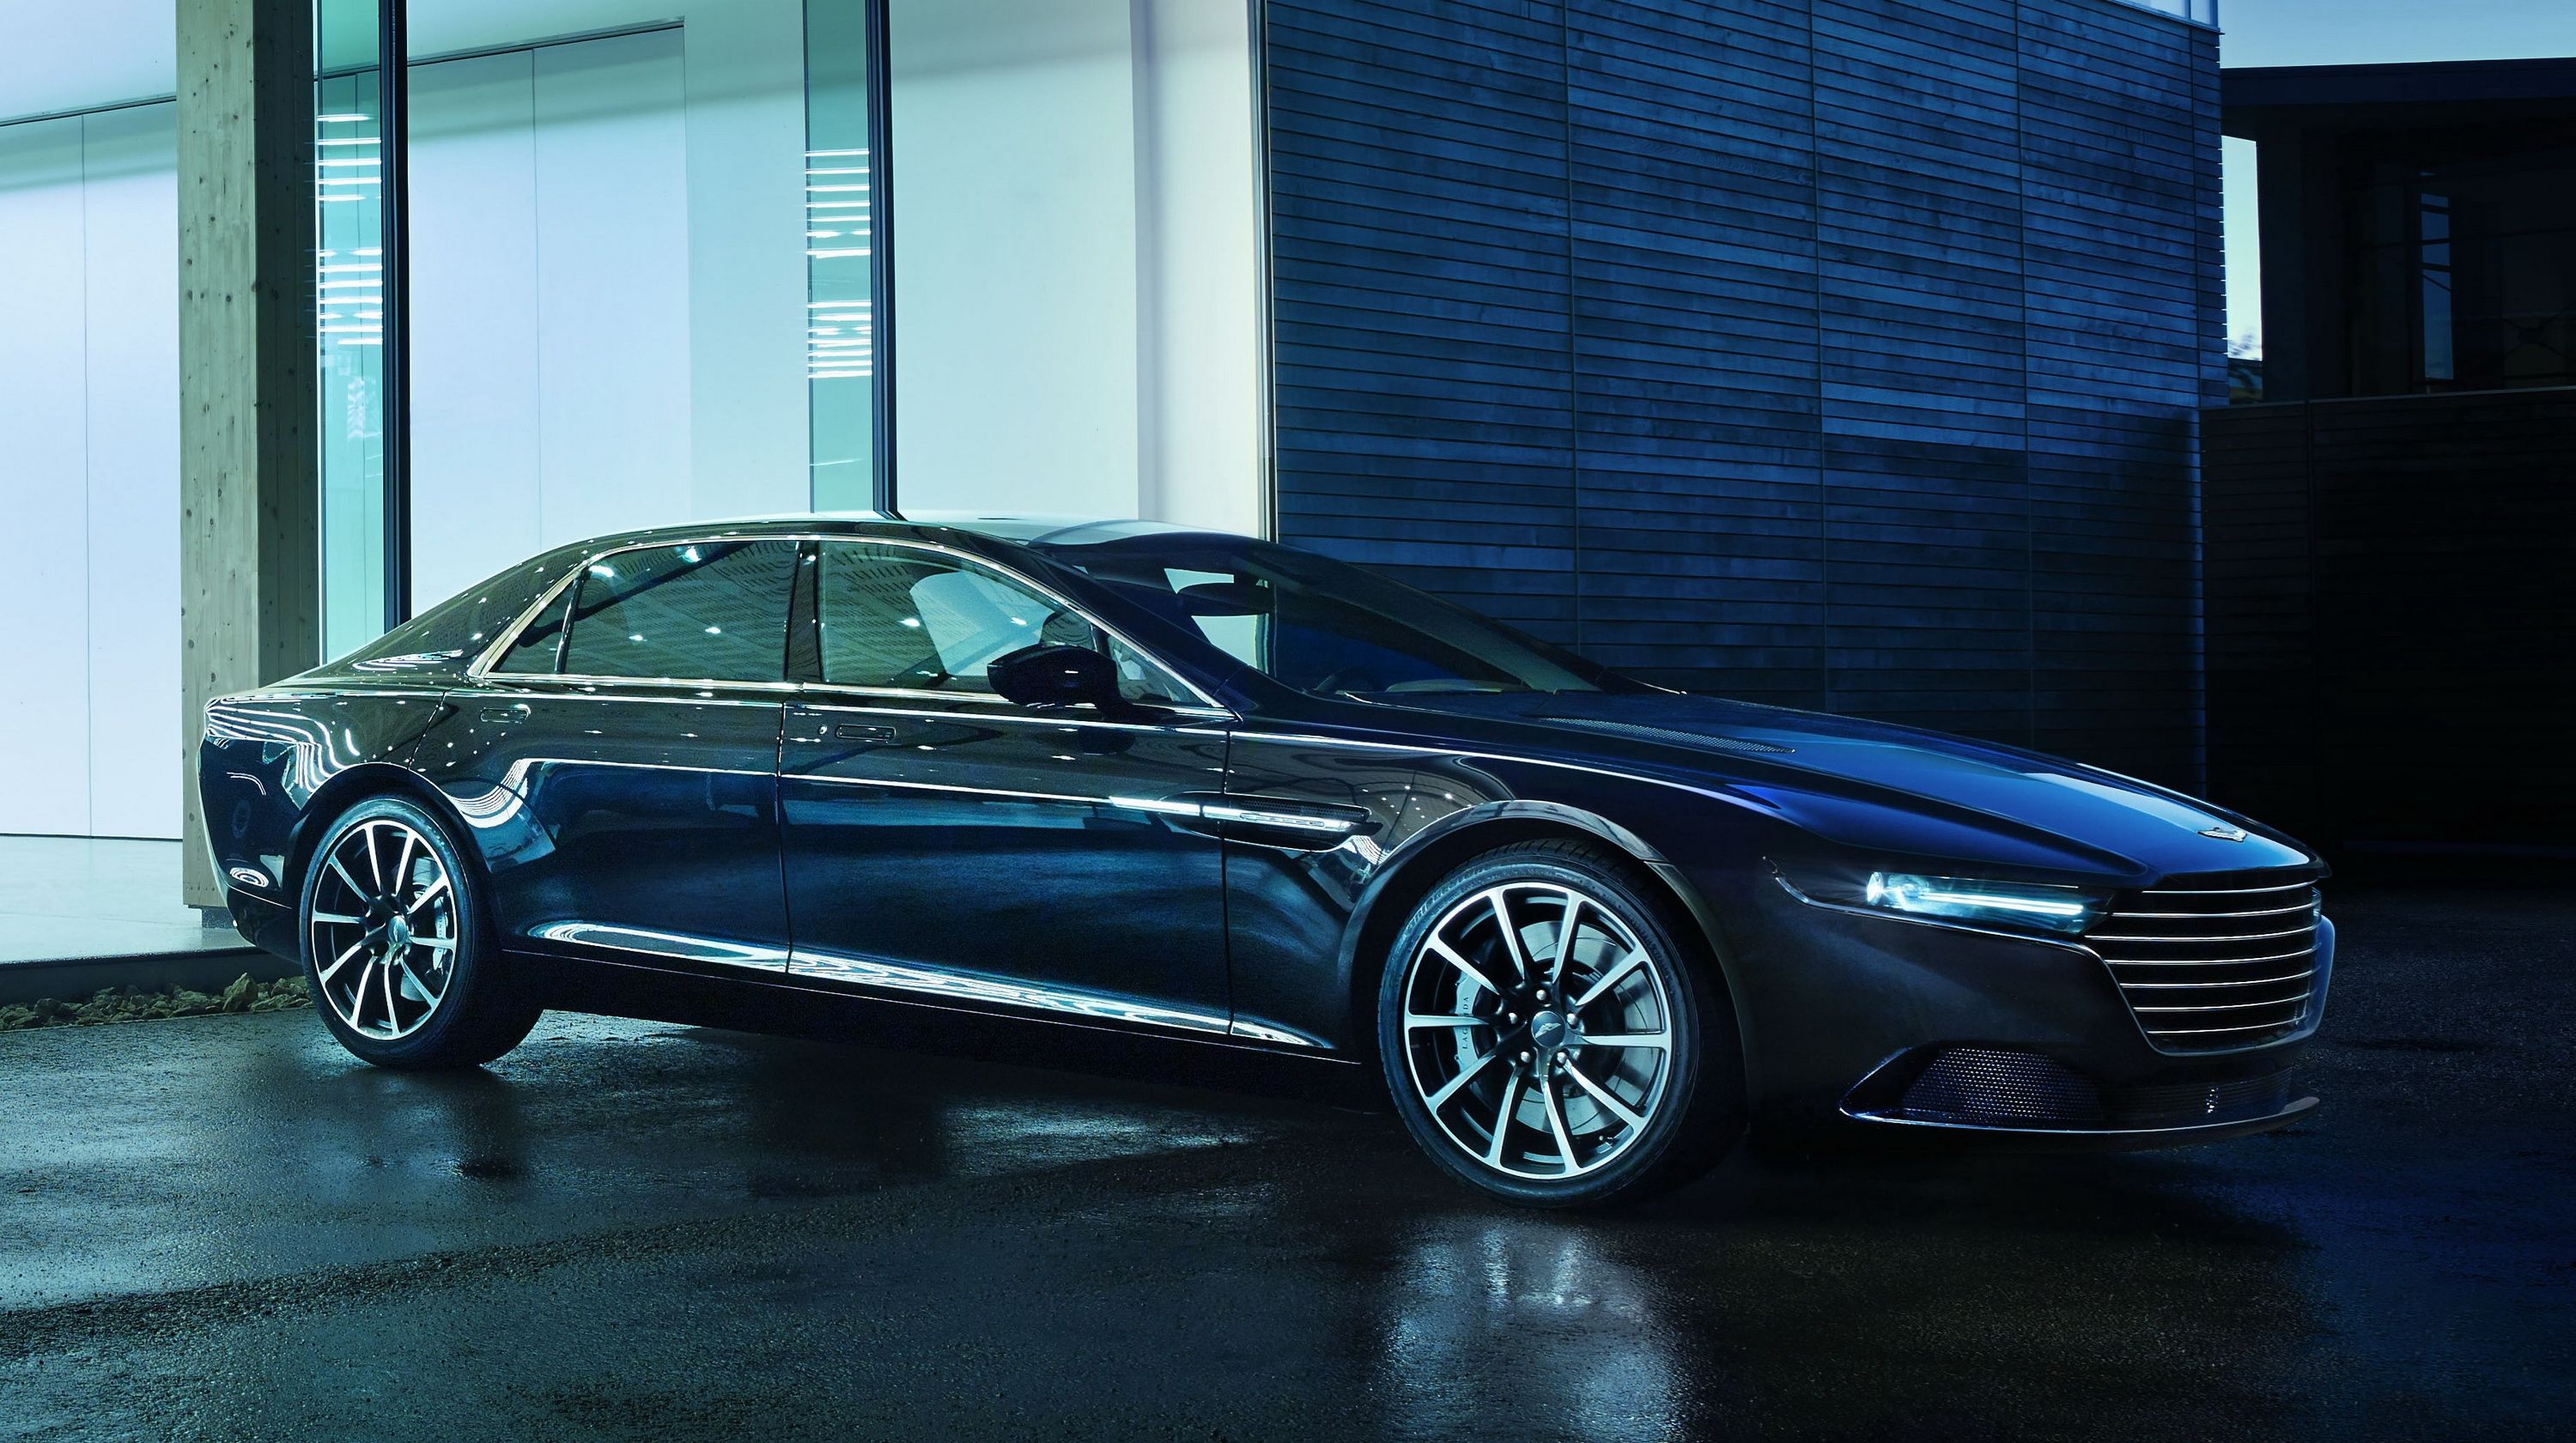 The Aston Martin Lagonda shows off its sexy skin.